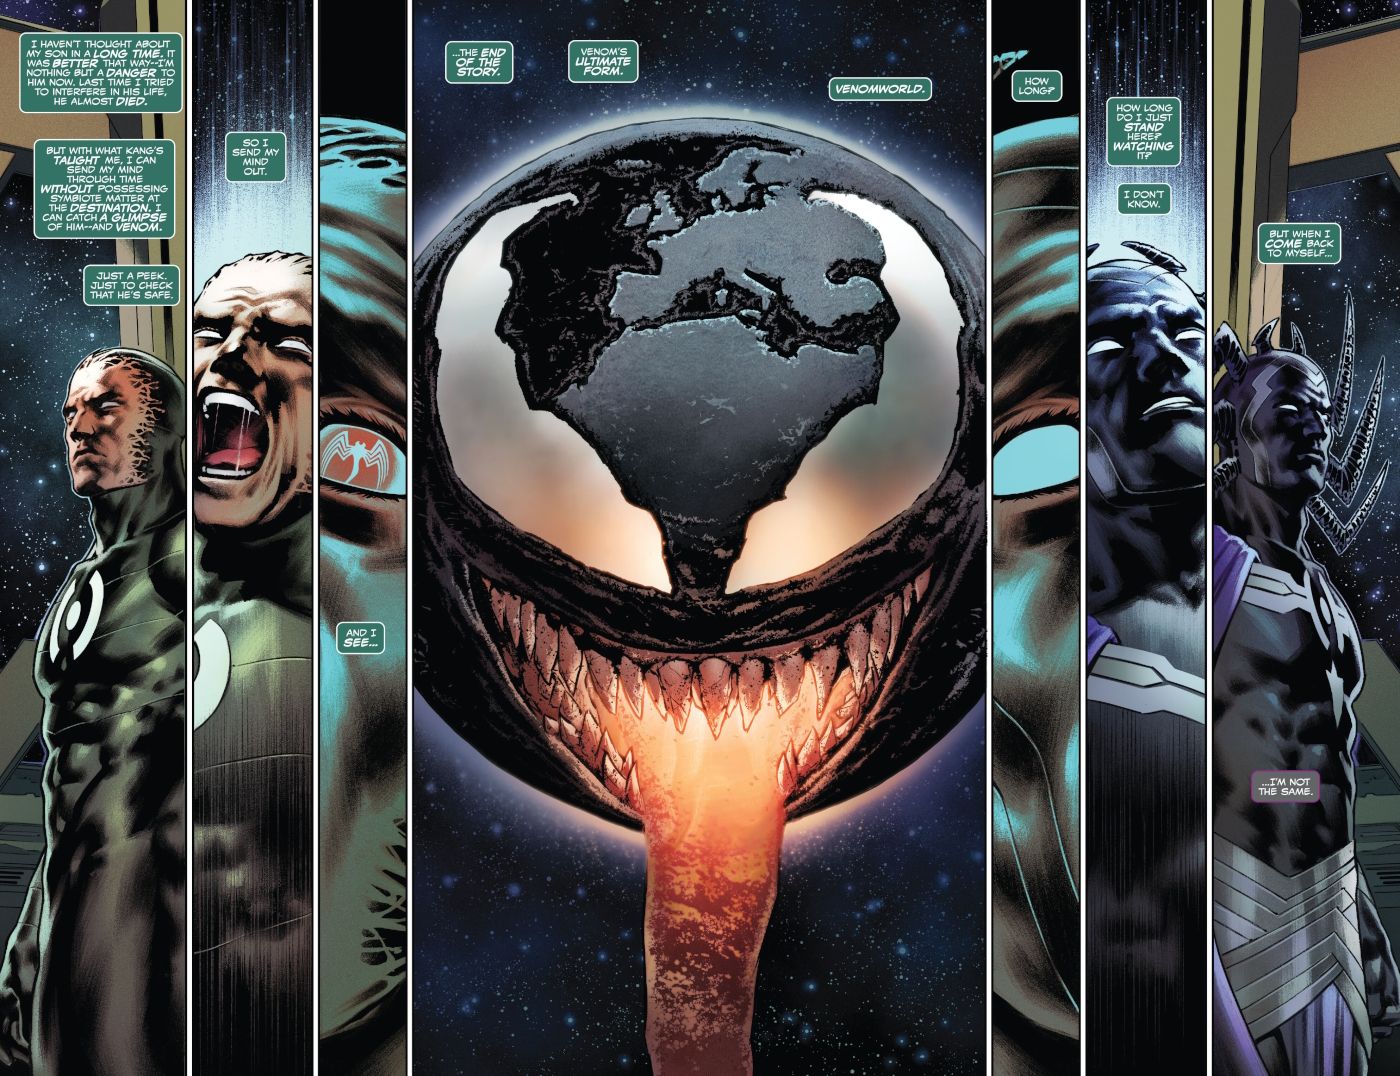 Venom #29, Eddie Brock time travels far into the future and discovers Venom World 